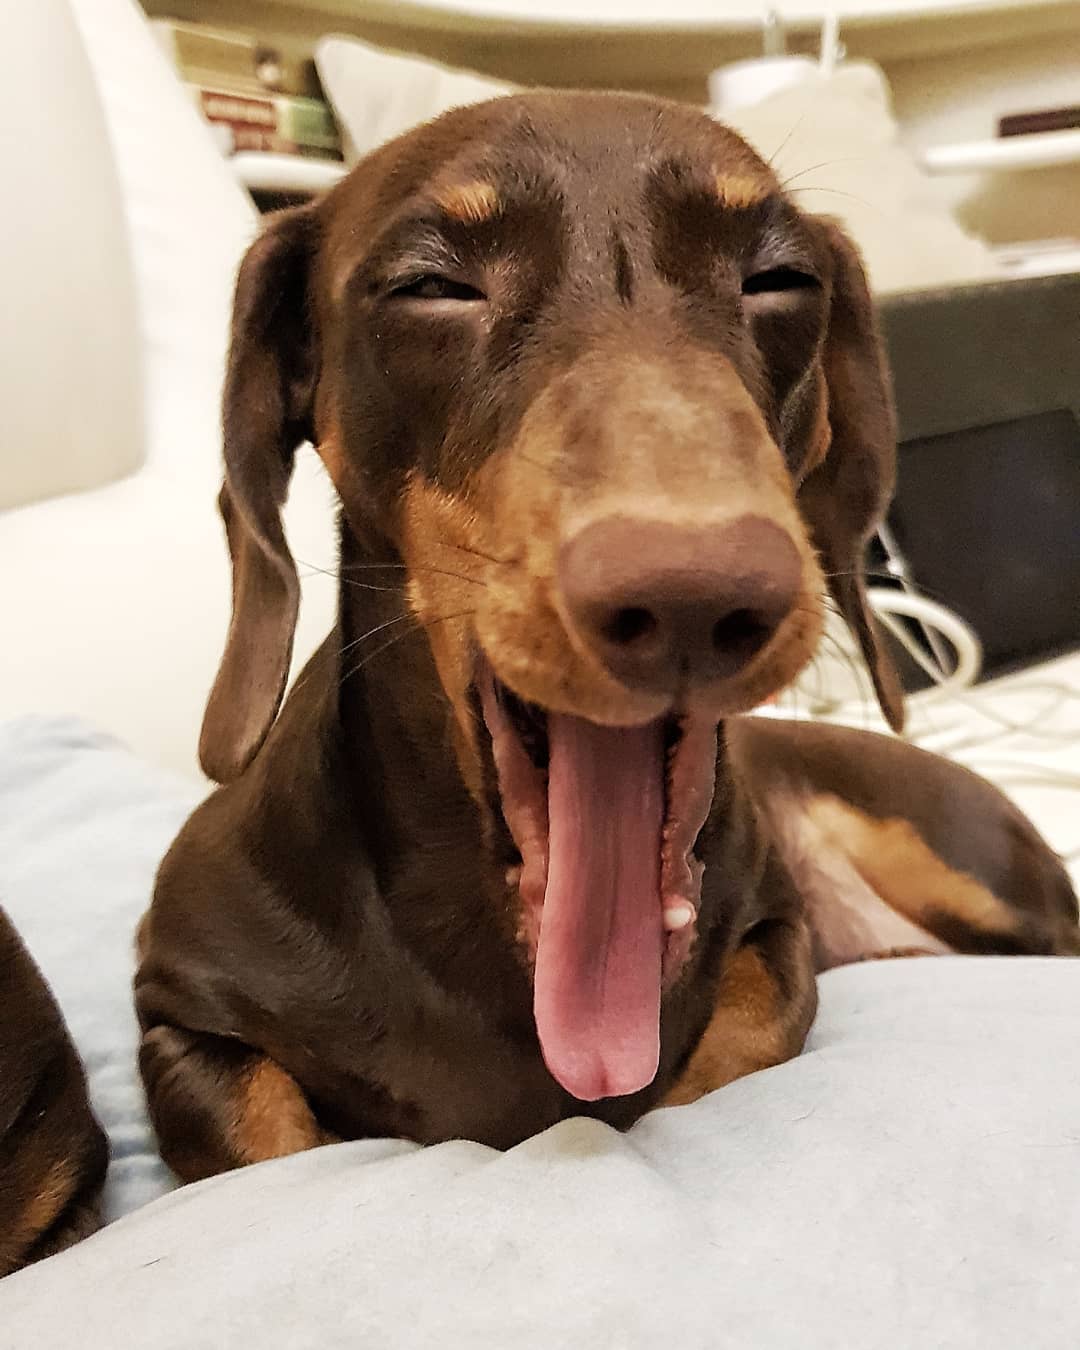 Dachshund lying on the bed while yawning